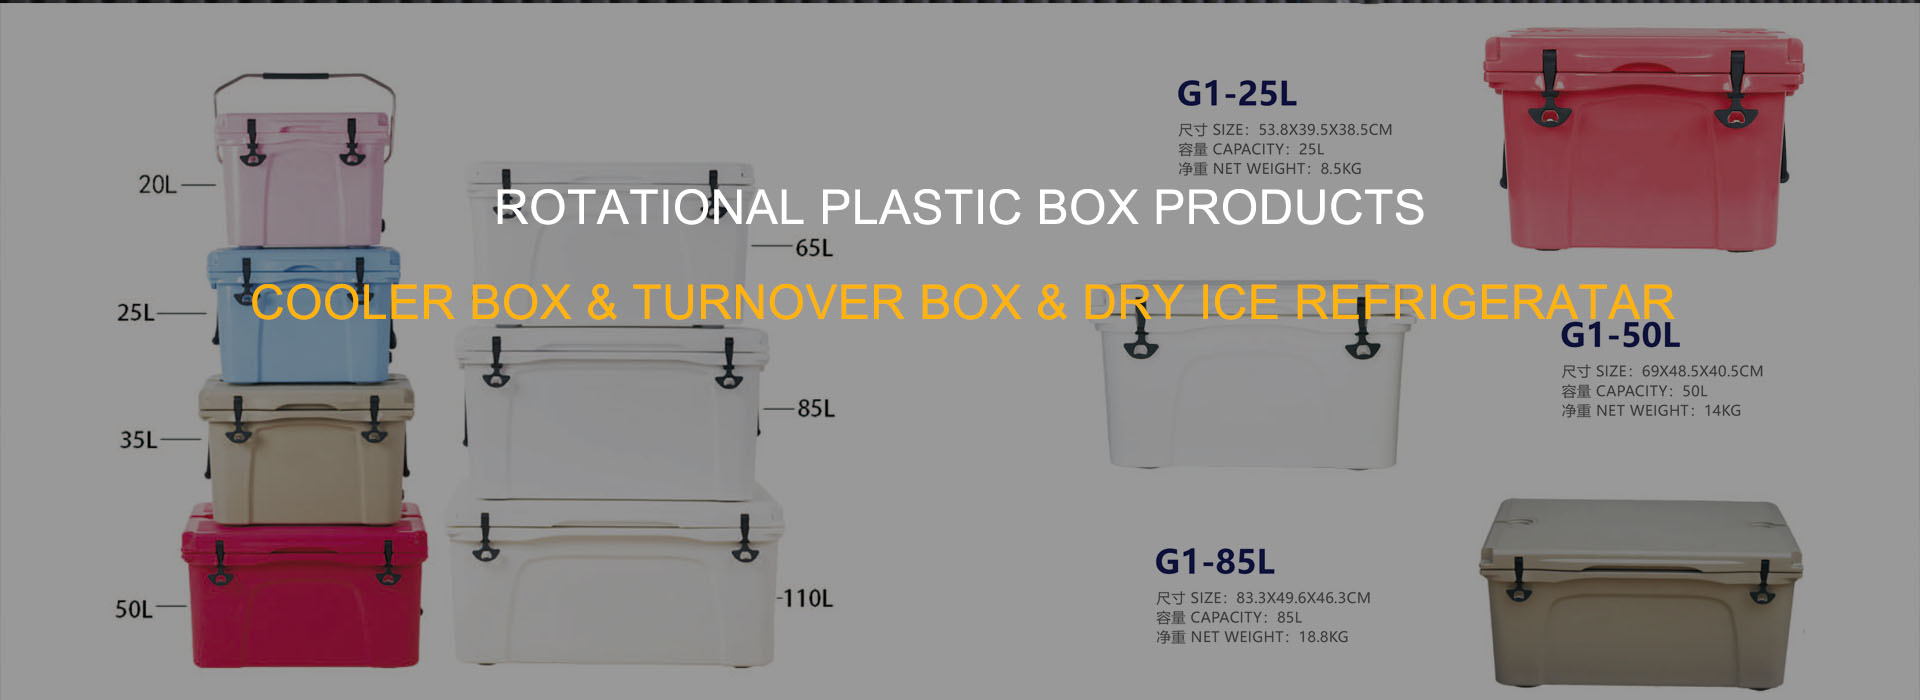 Rotational plastic box products